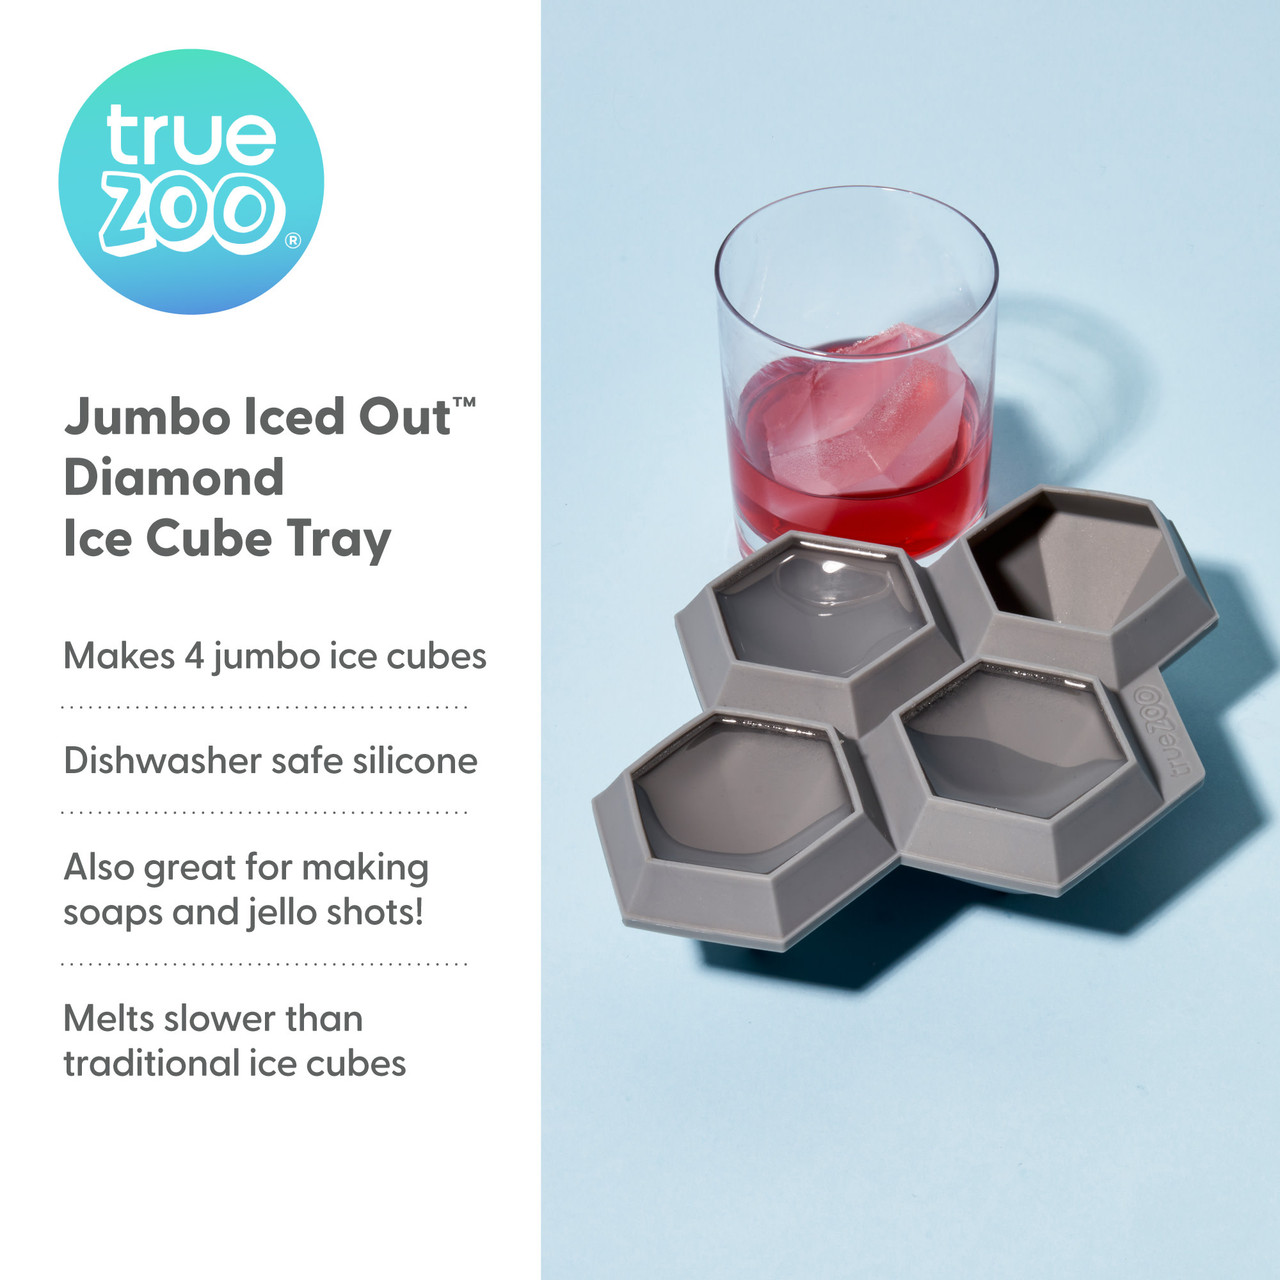 Jumbo Iced Out Tray by TrueZoo